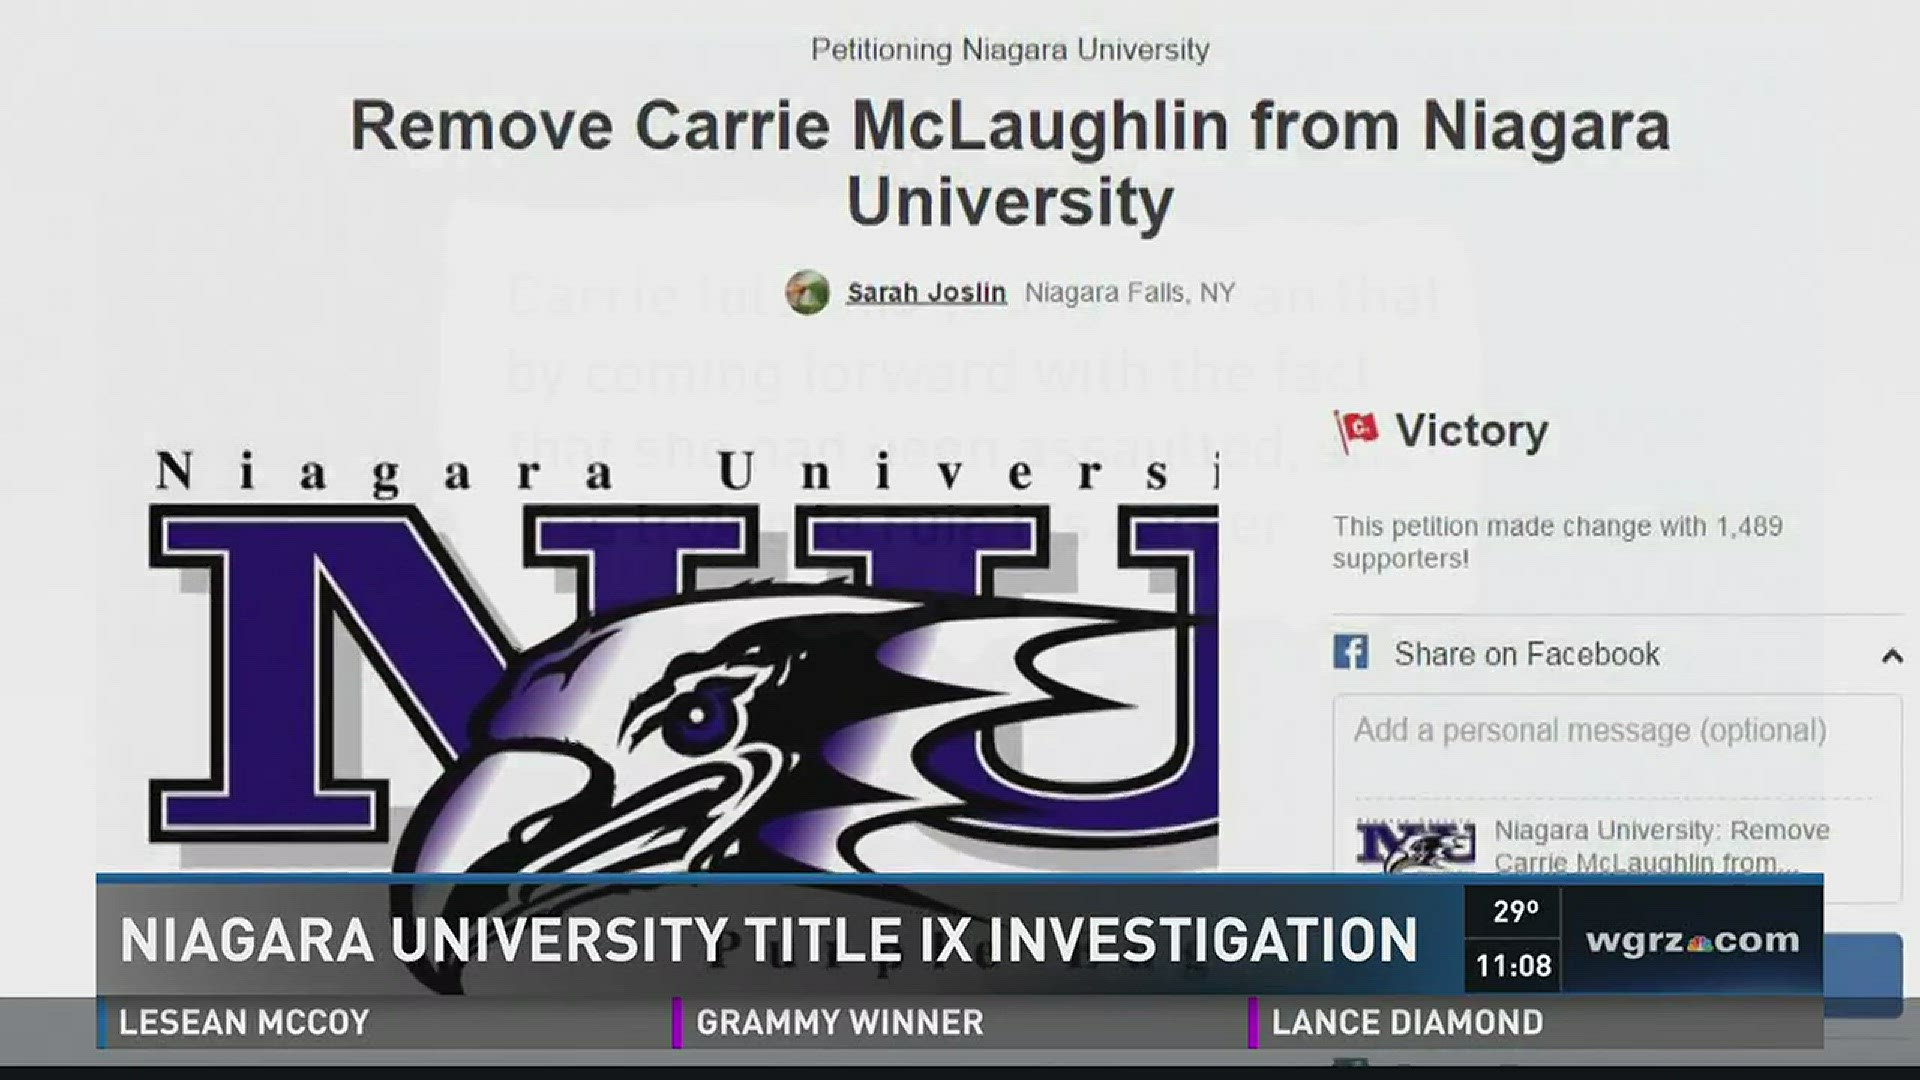 Niagara University title IX investigation